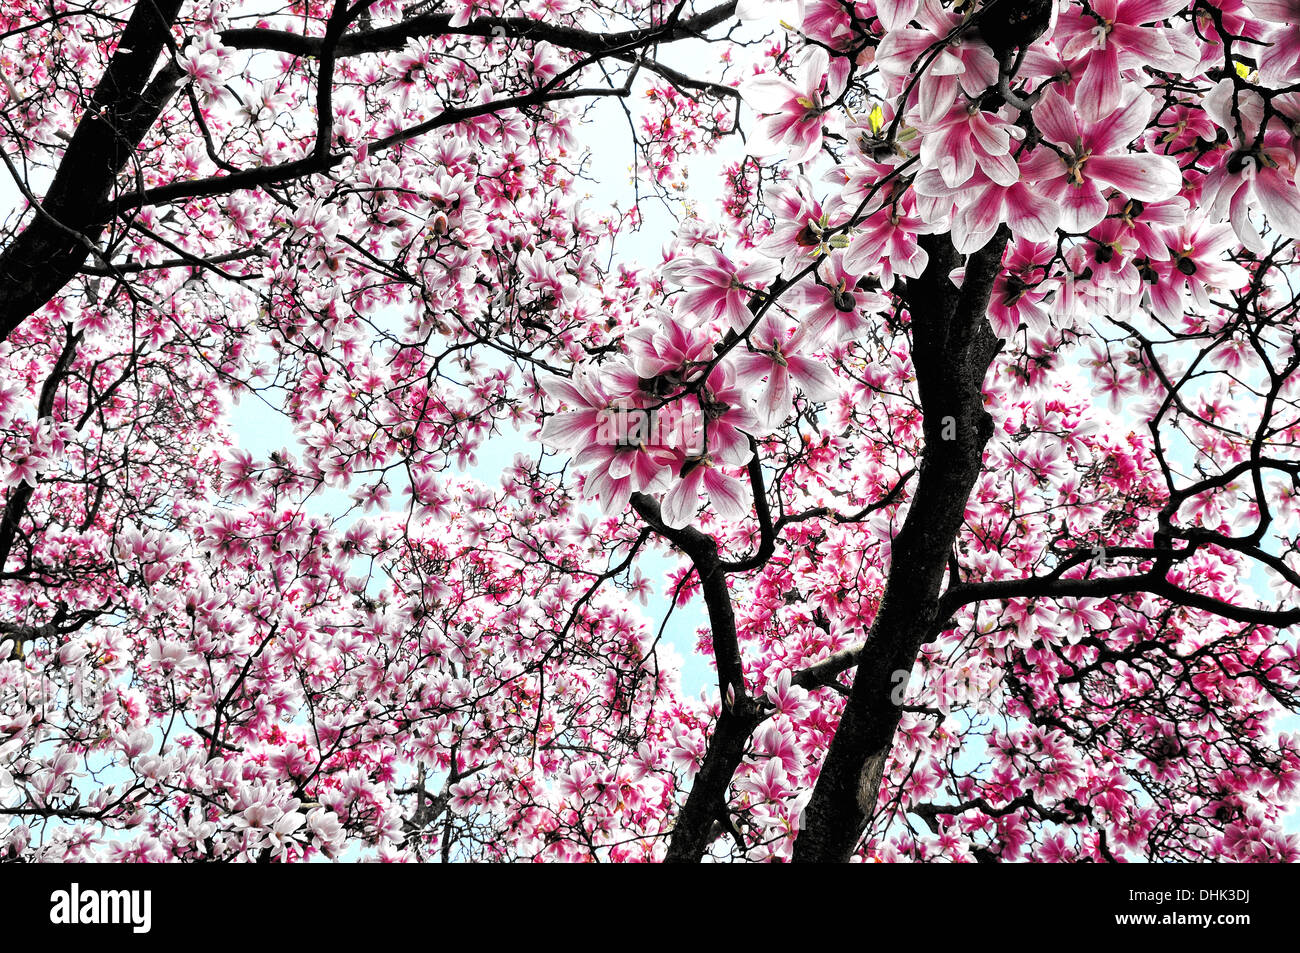 dream of pink magnolia blossoms Stock Photo